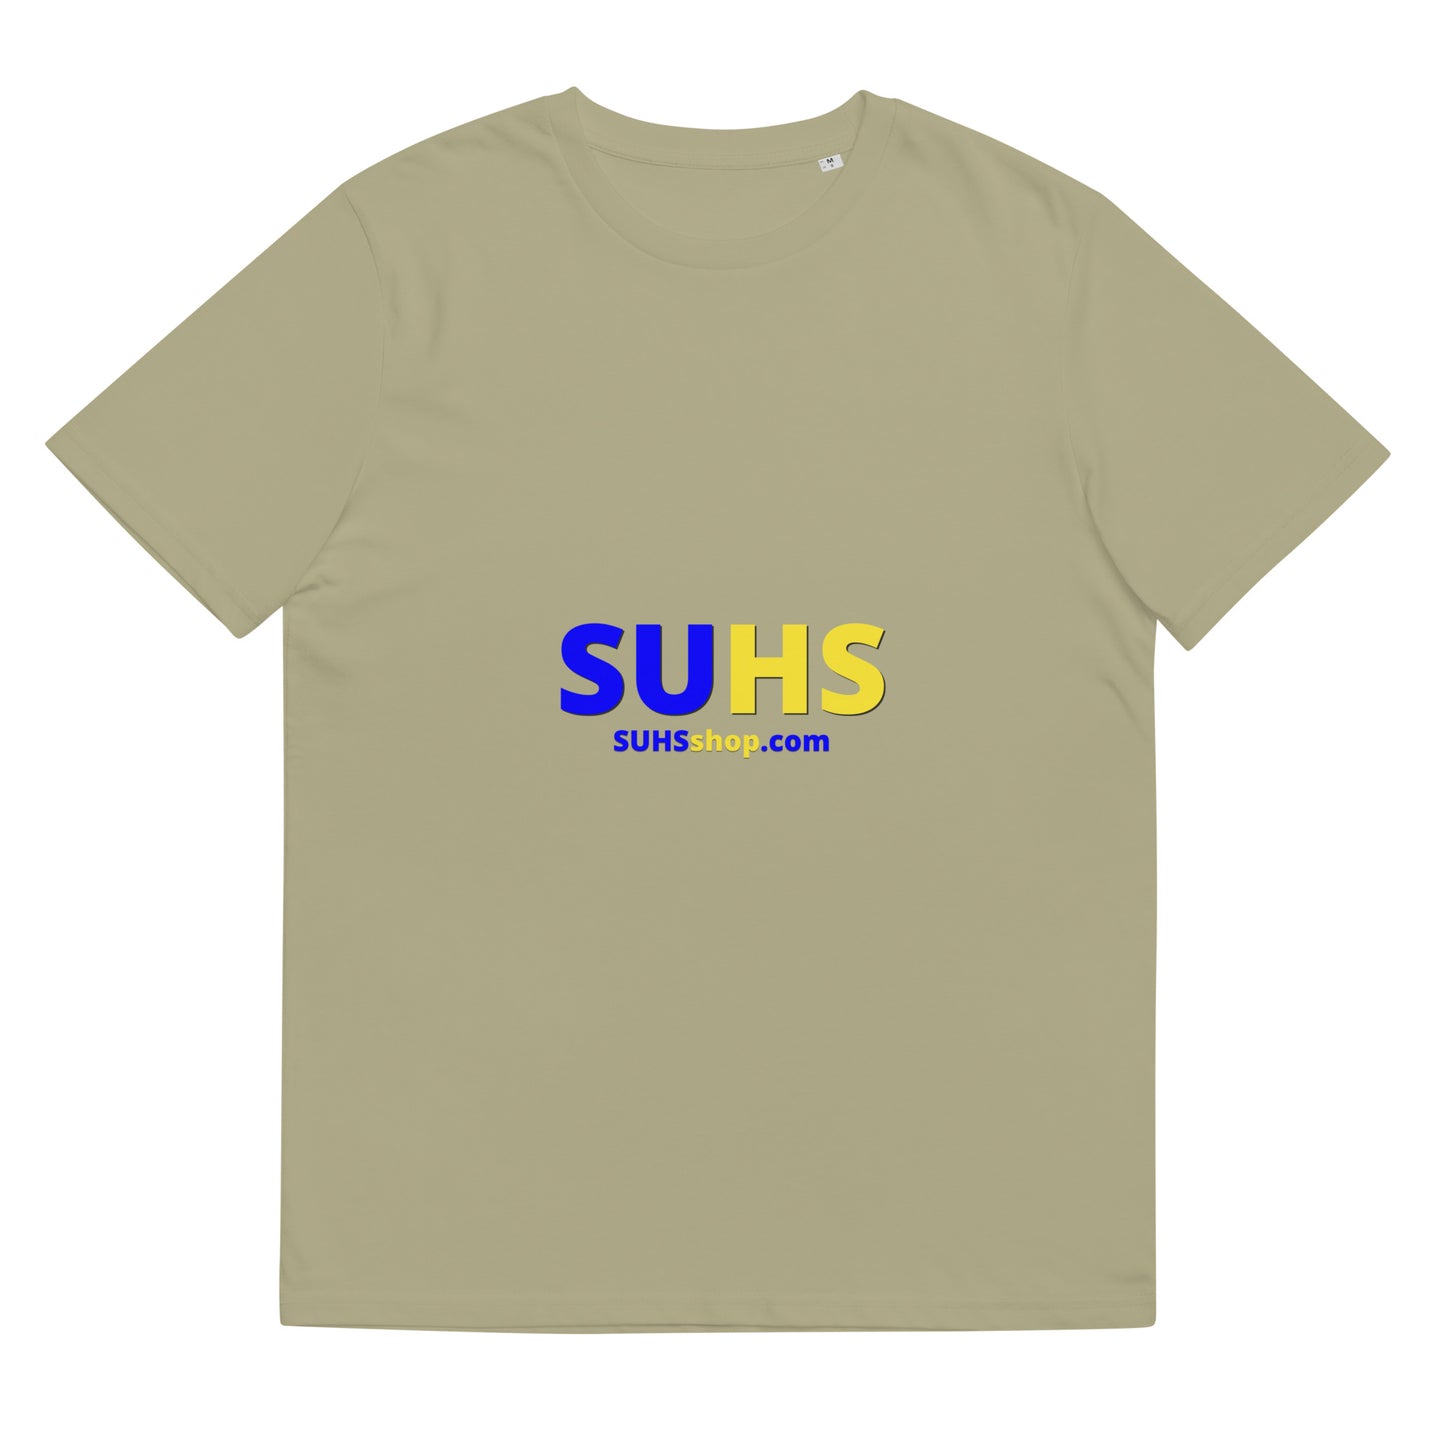 Unisex organic cotton t-shirt (personalized design)